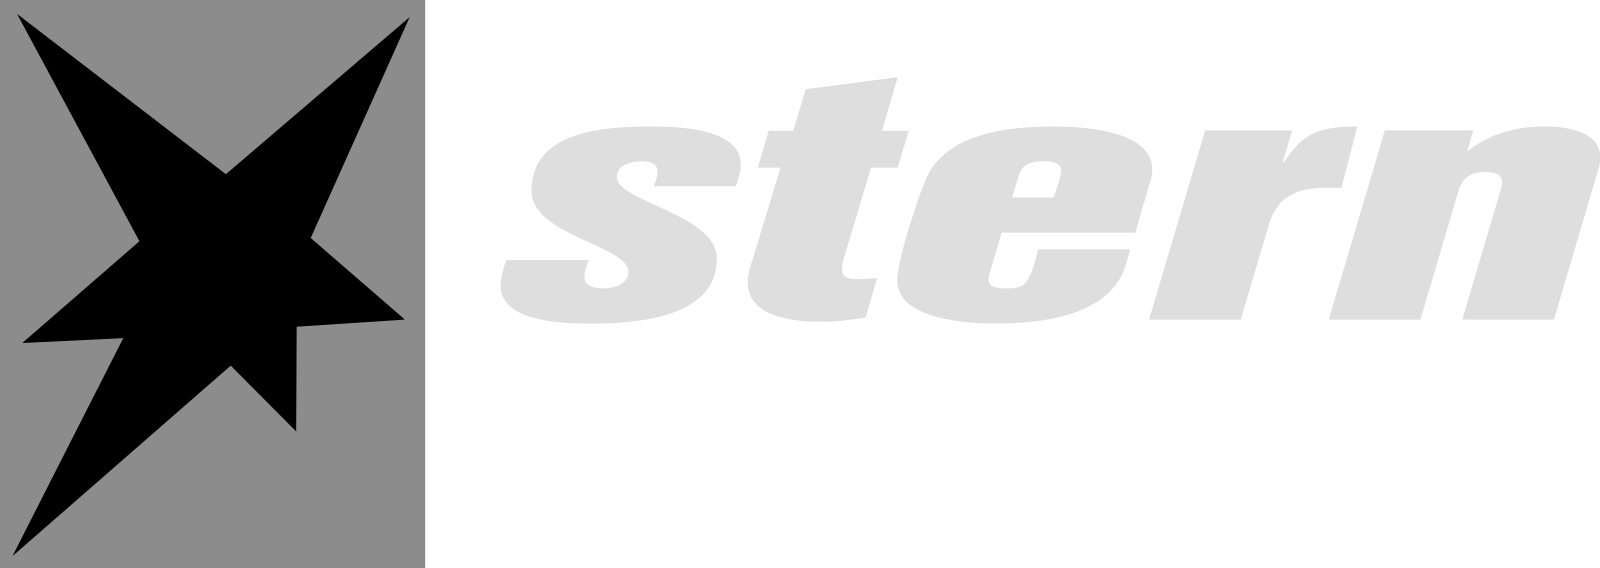 Stern-Logo_komplett.svg.png